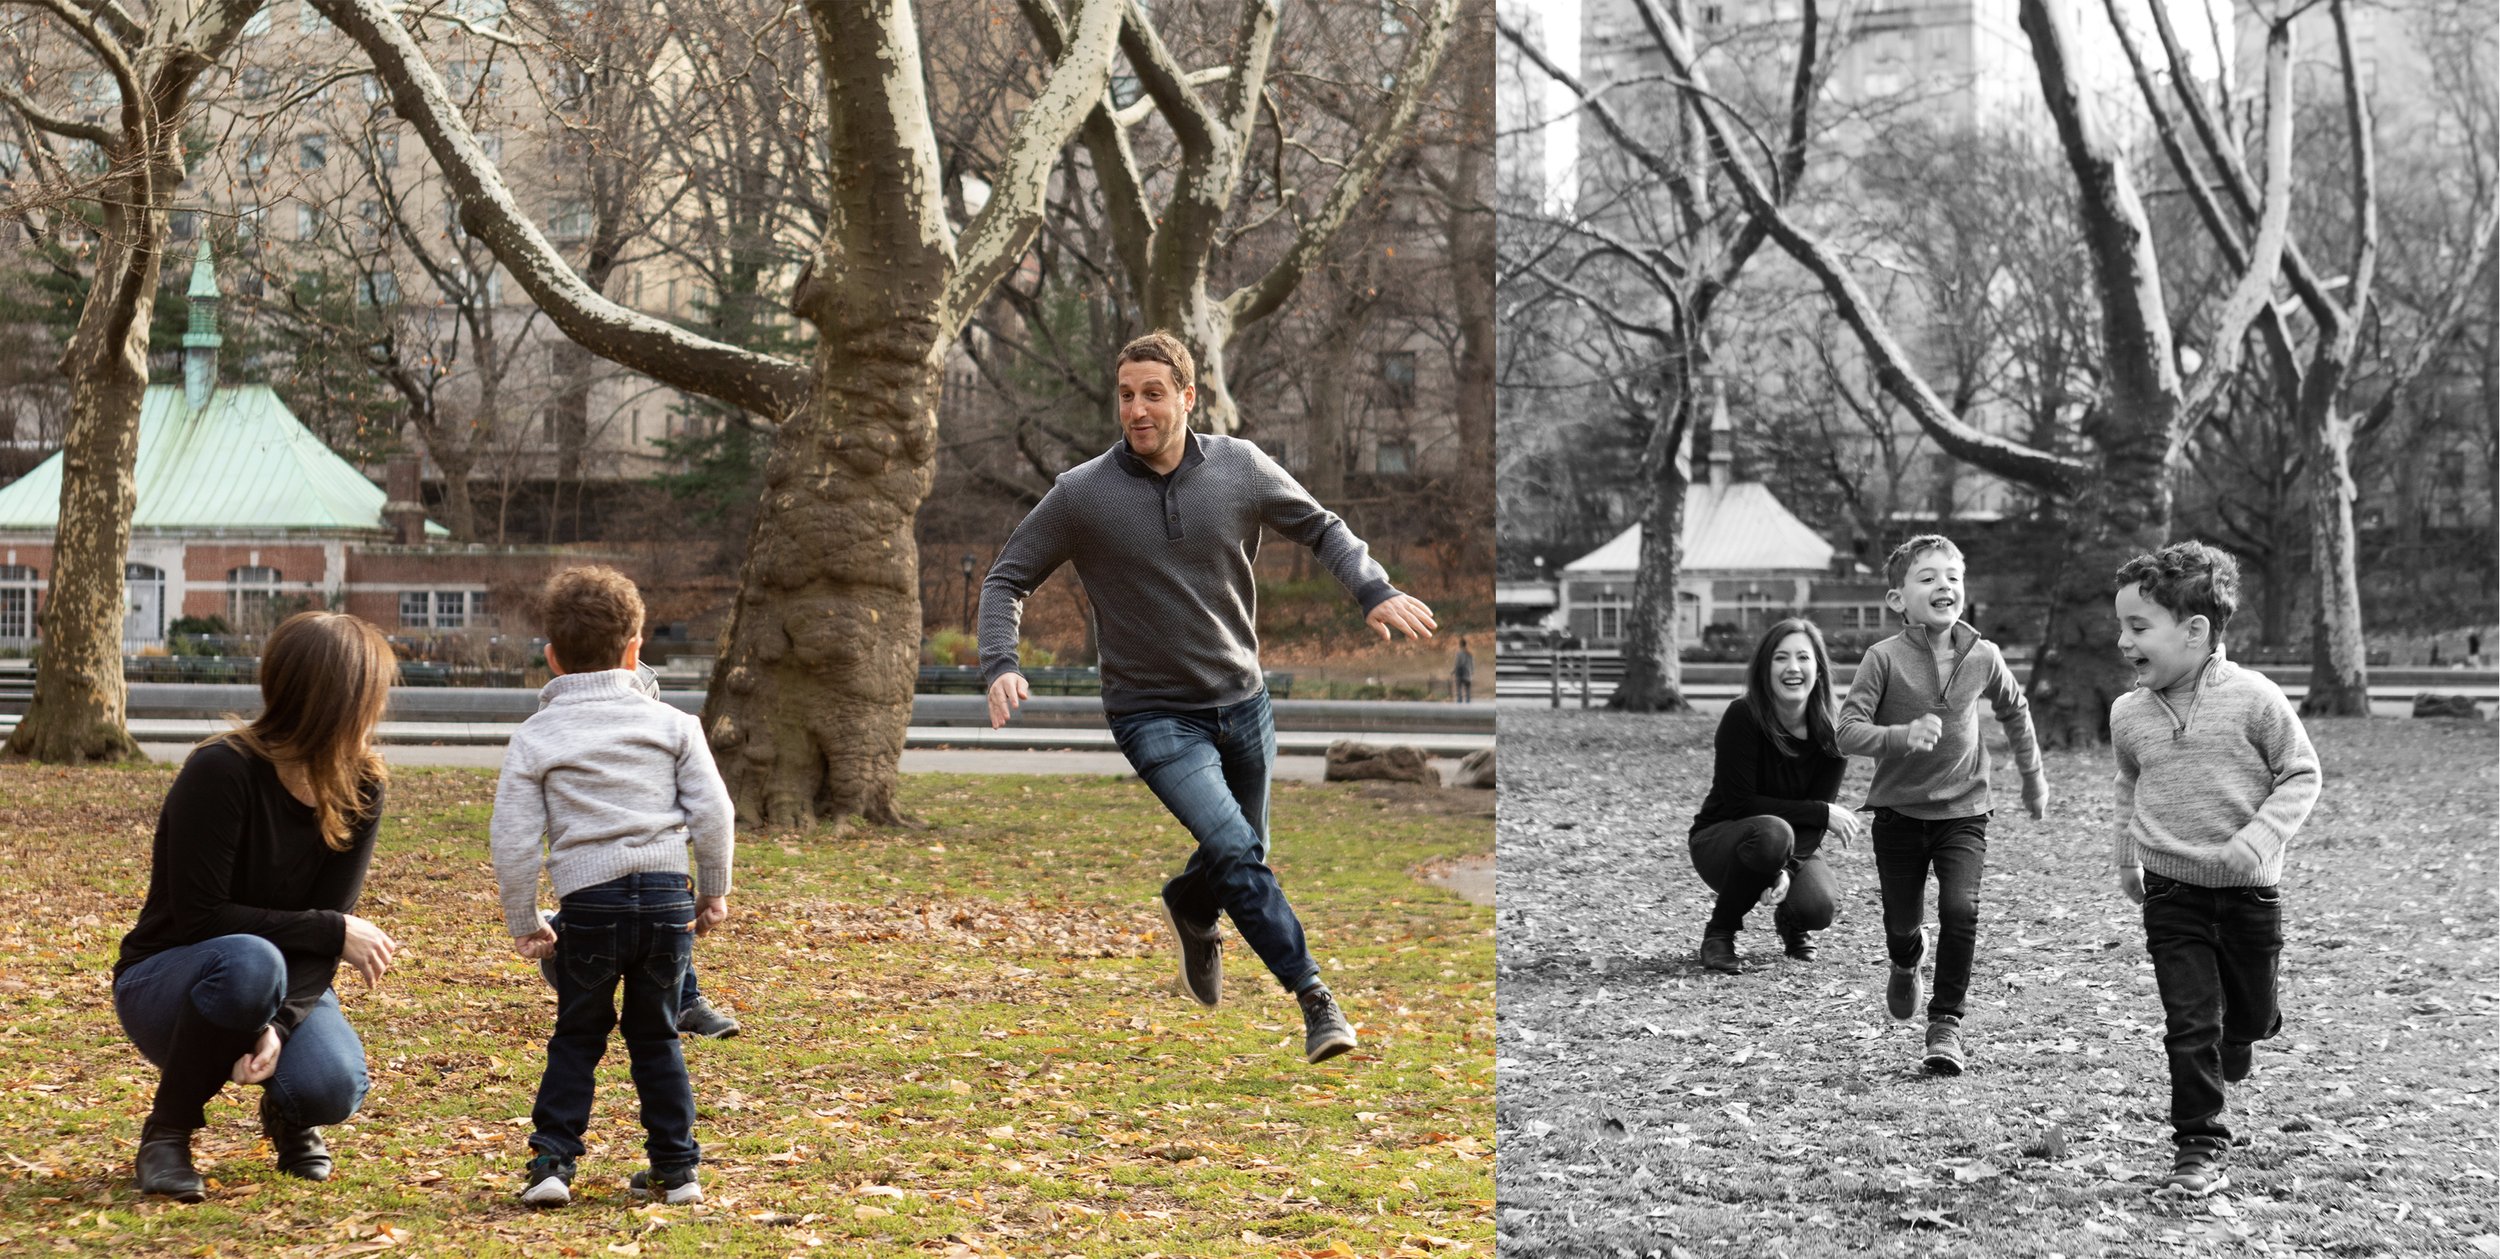 Central Park NYC Family Photographer _ Jonathan Heisler _12.19.2021 _ 0017.jpg